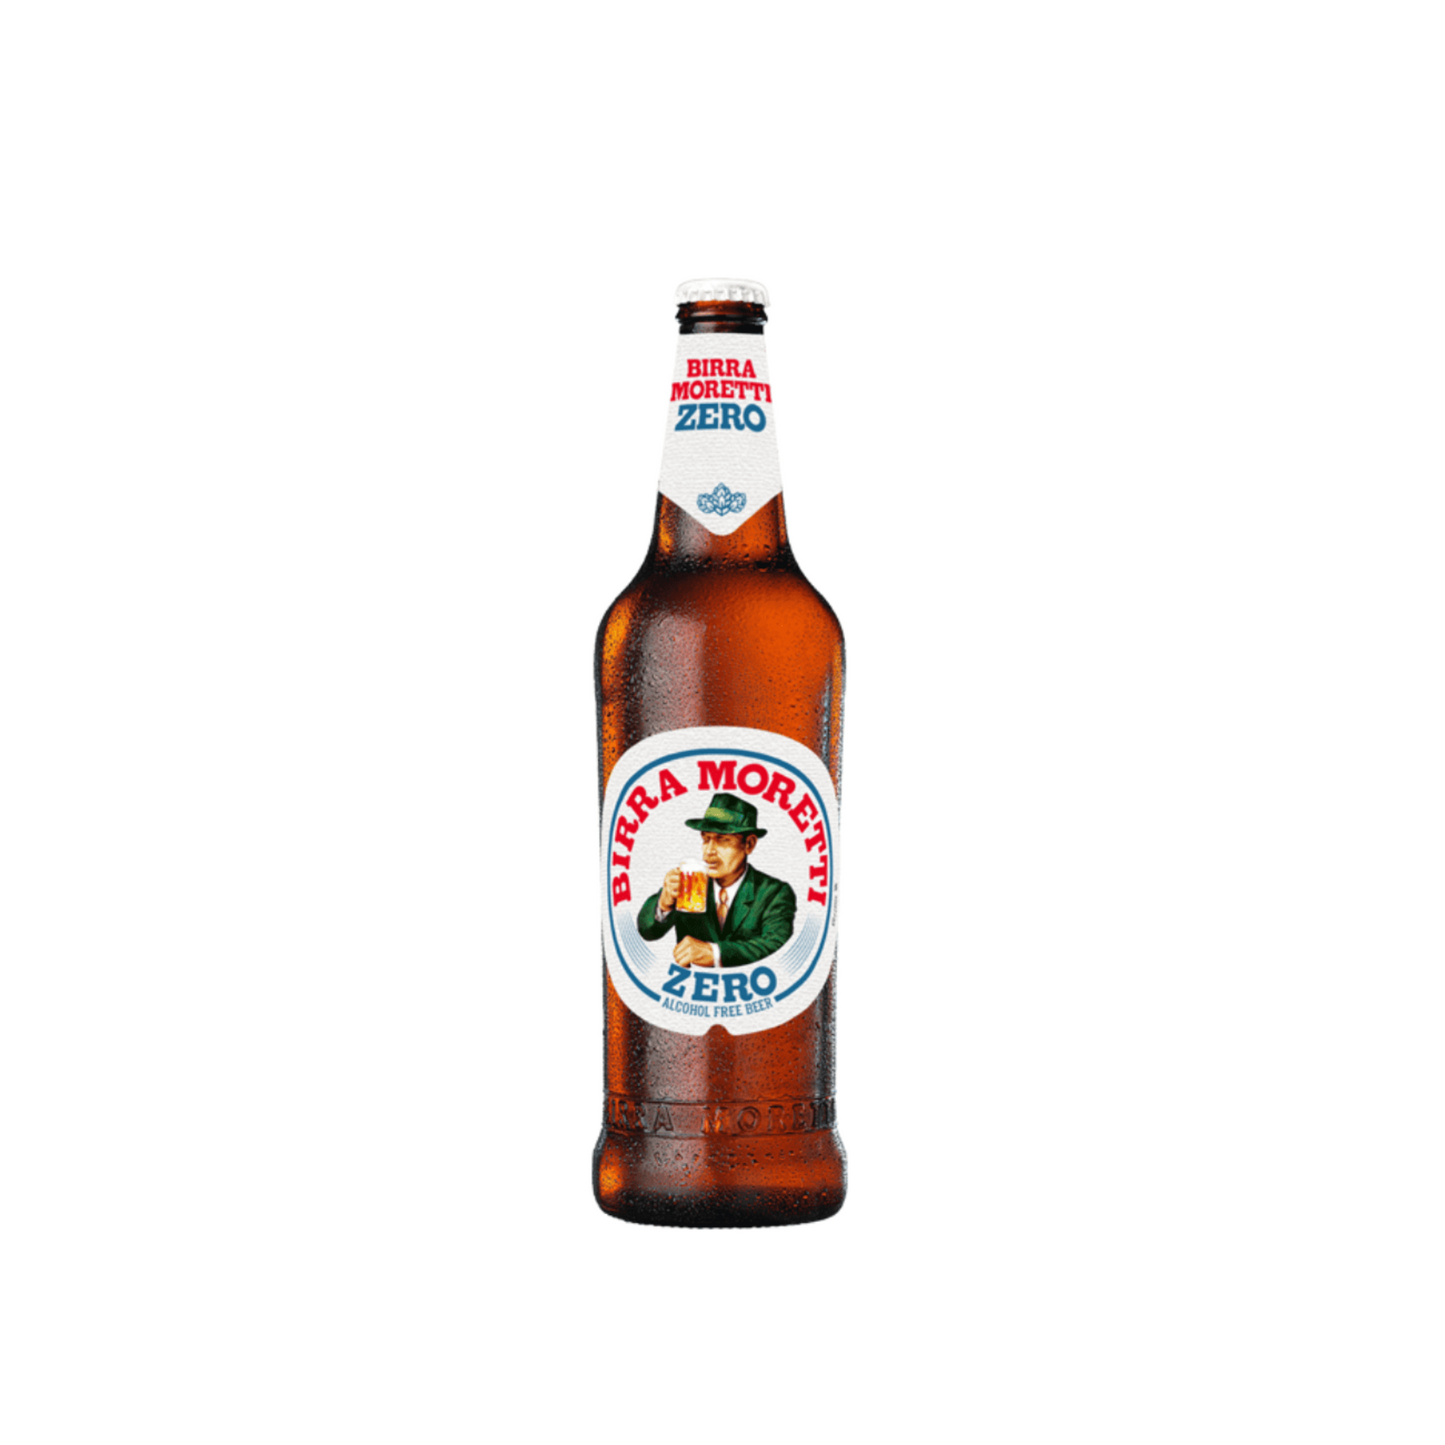 Birra Moretti Zero Alcohol Free Lager Beer